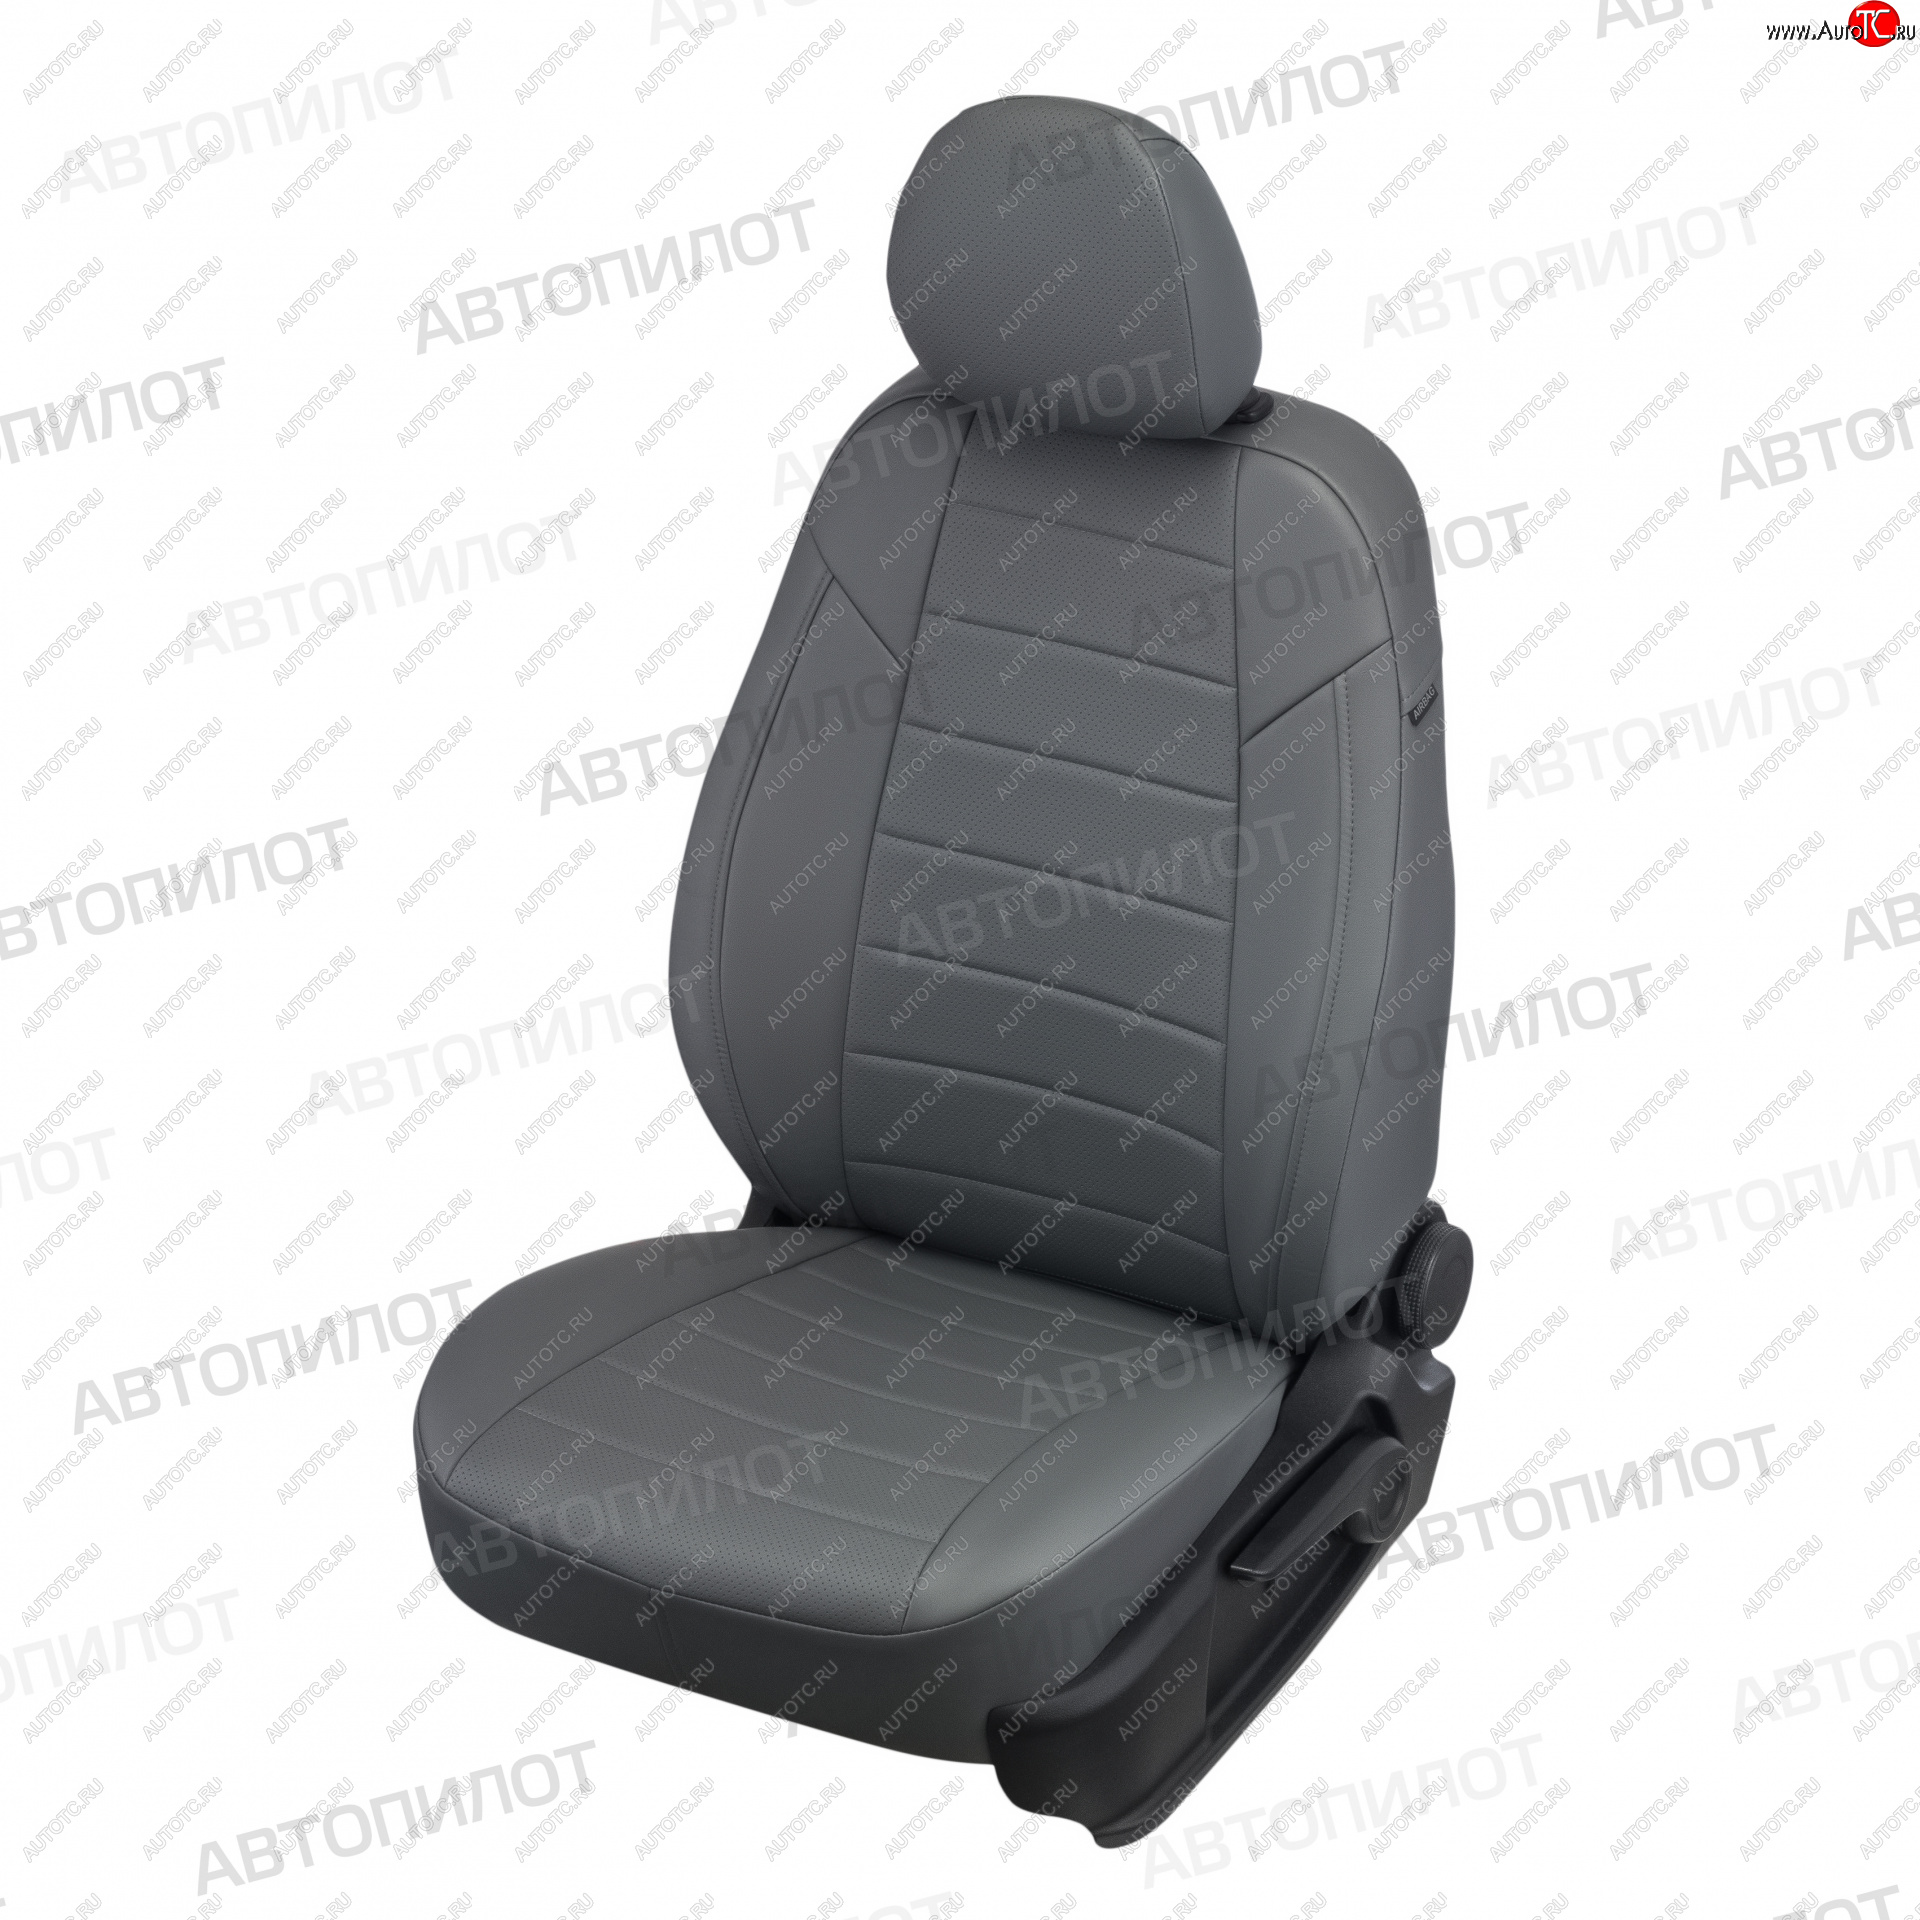 13 849 р. Чехлы сидений (5 мест, экокожа) Автопилот  Ford Galaxy  WGR (1995-2006) (серый)